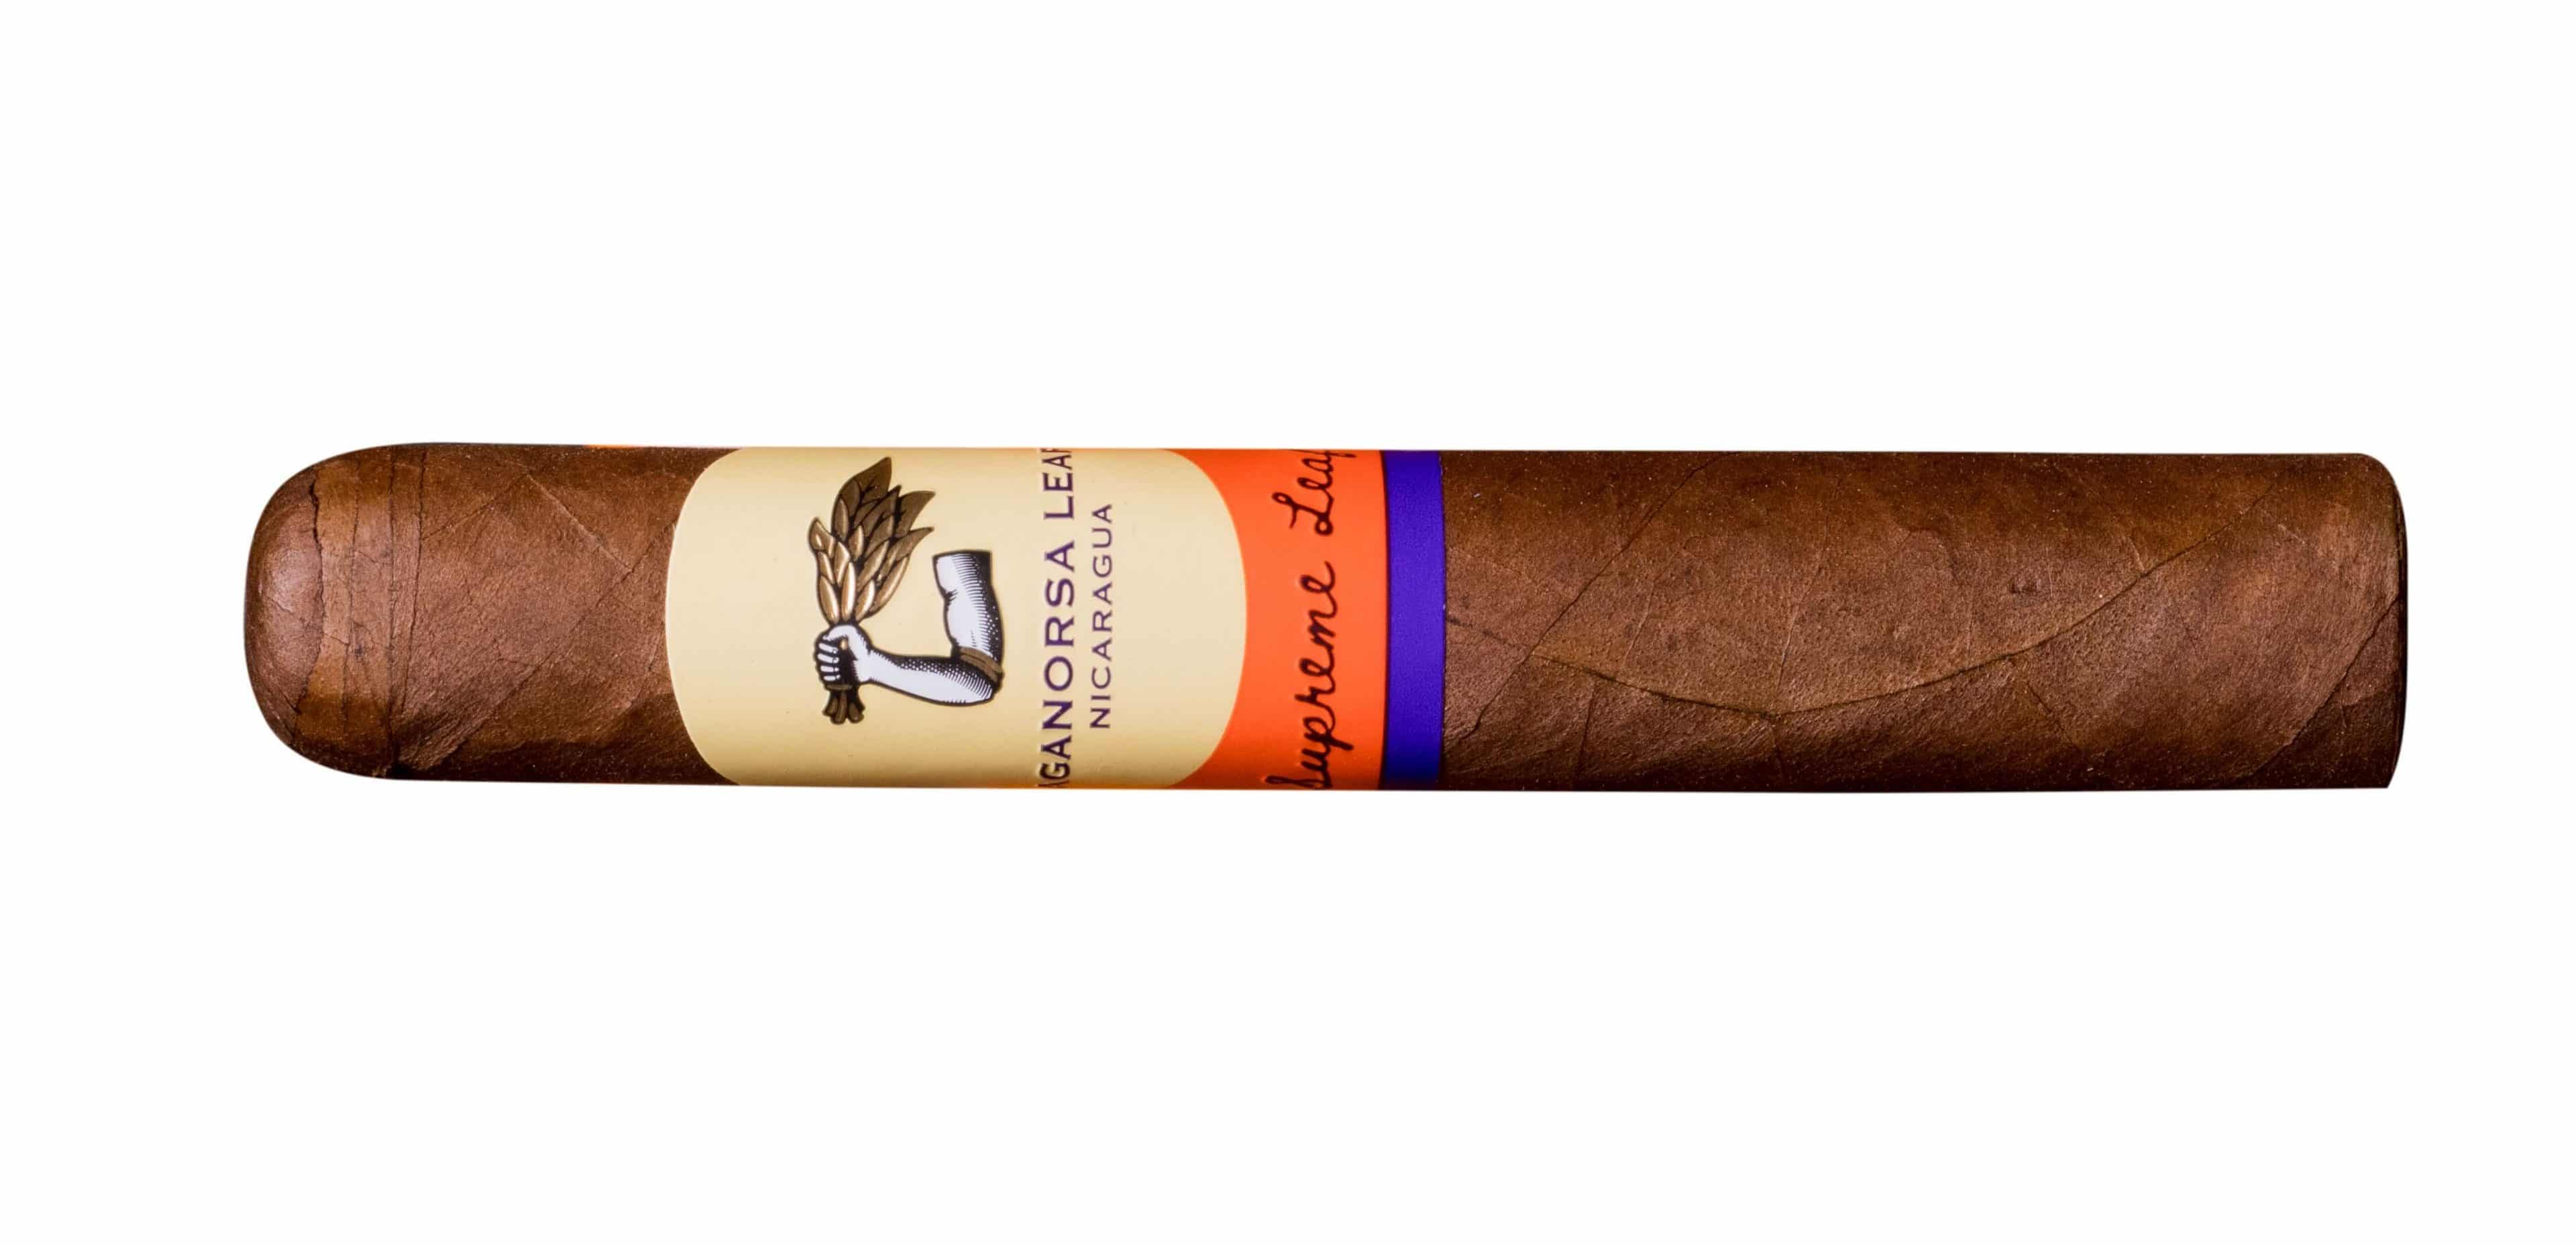 Cigar News: Aganorsa Leaf Announces Supreme Leaf